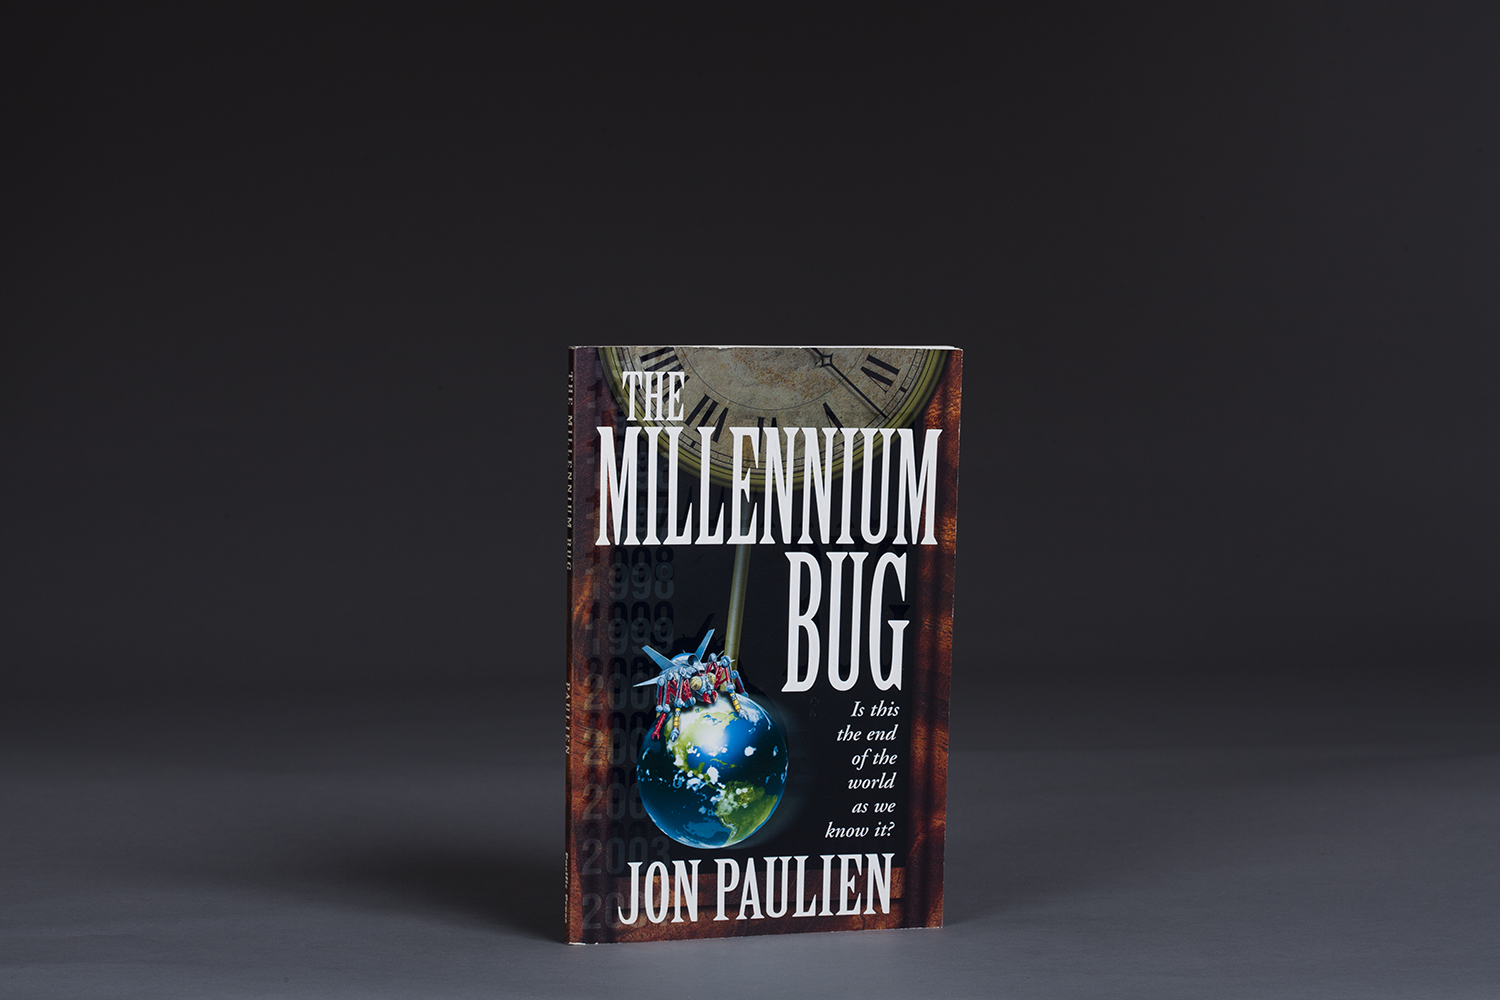 The Millennium Bug - 0282 Cover.jpg